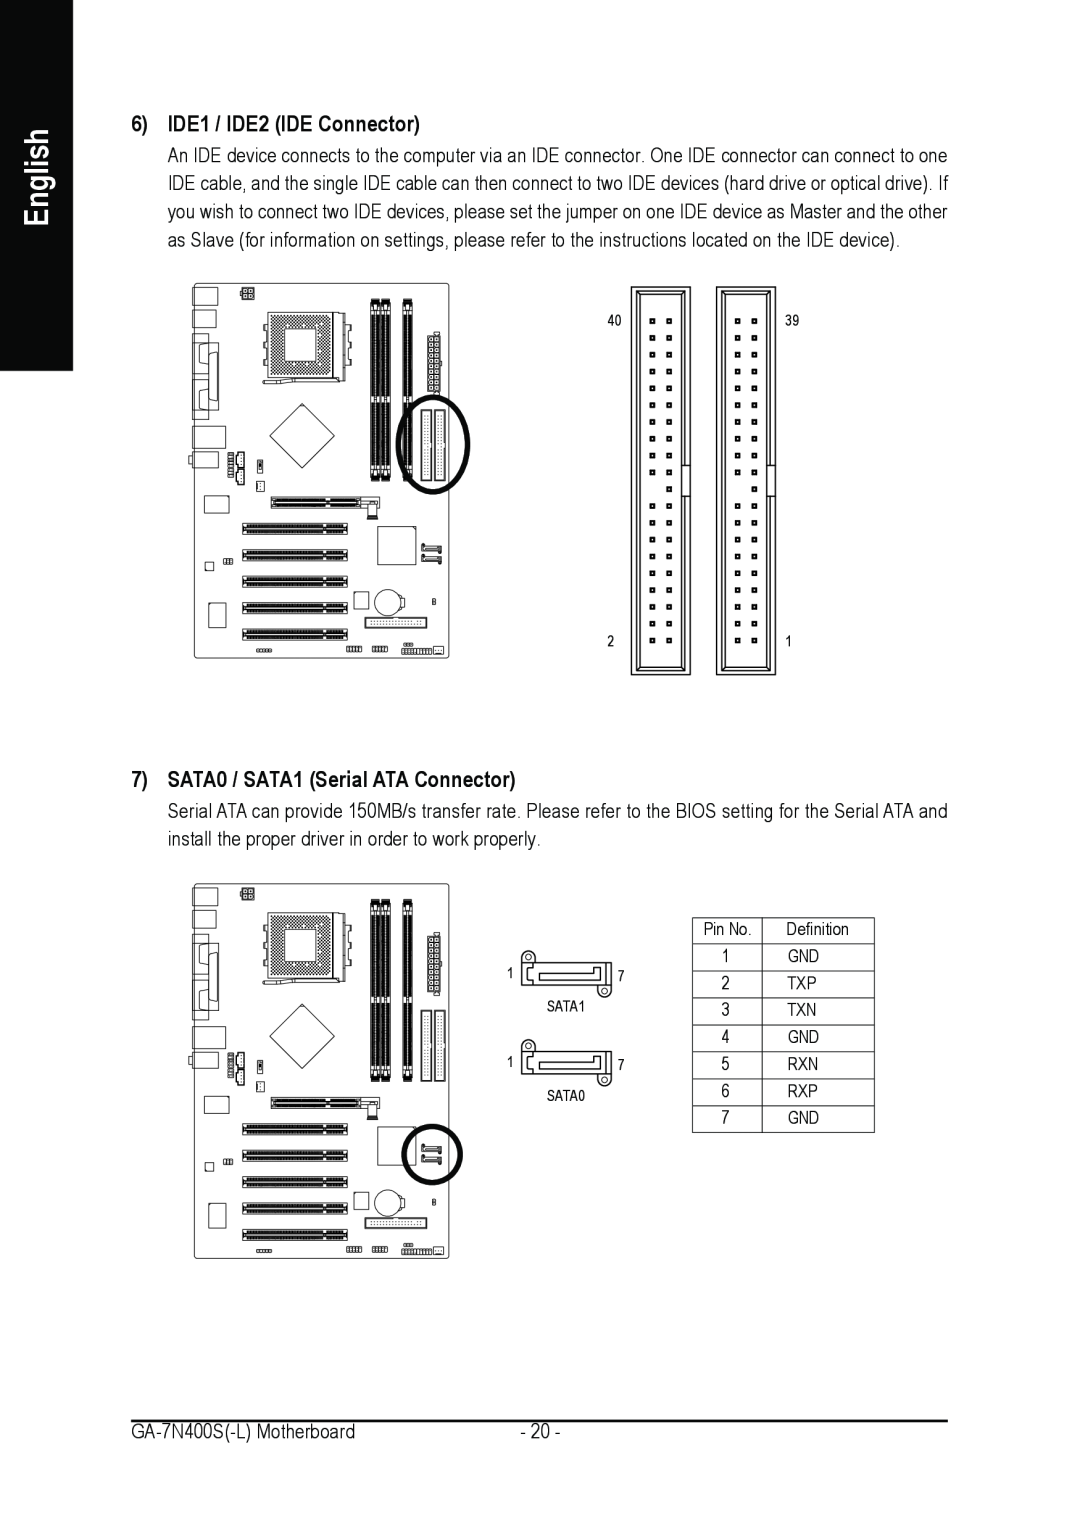 Gigabyte GA-7N400S-L user manual 6 IDE1 / IDE2 IDE Connector, SATA0 / SATA1 Serial ATA Connector, English 